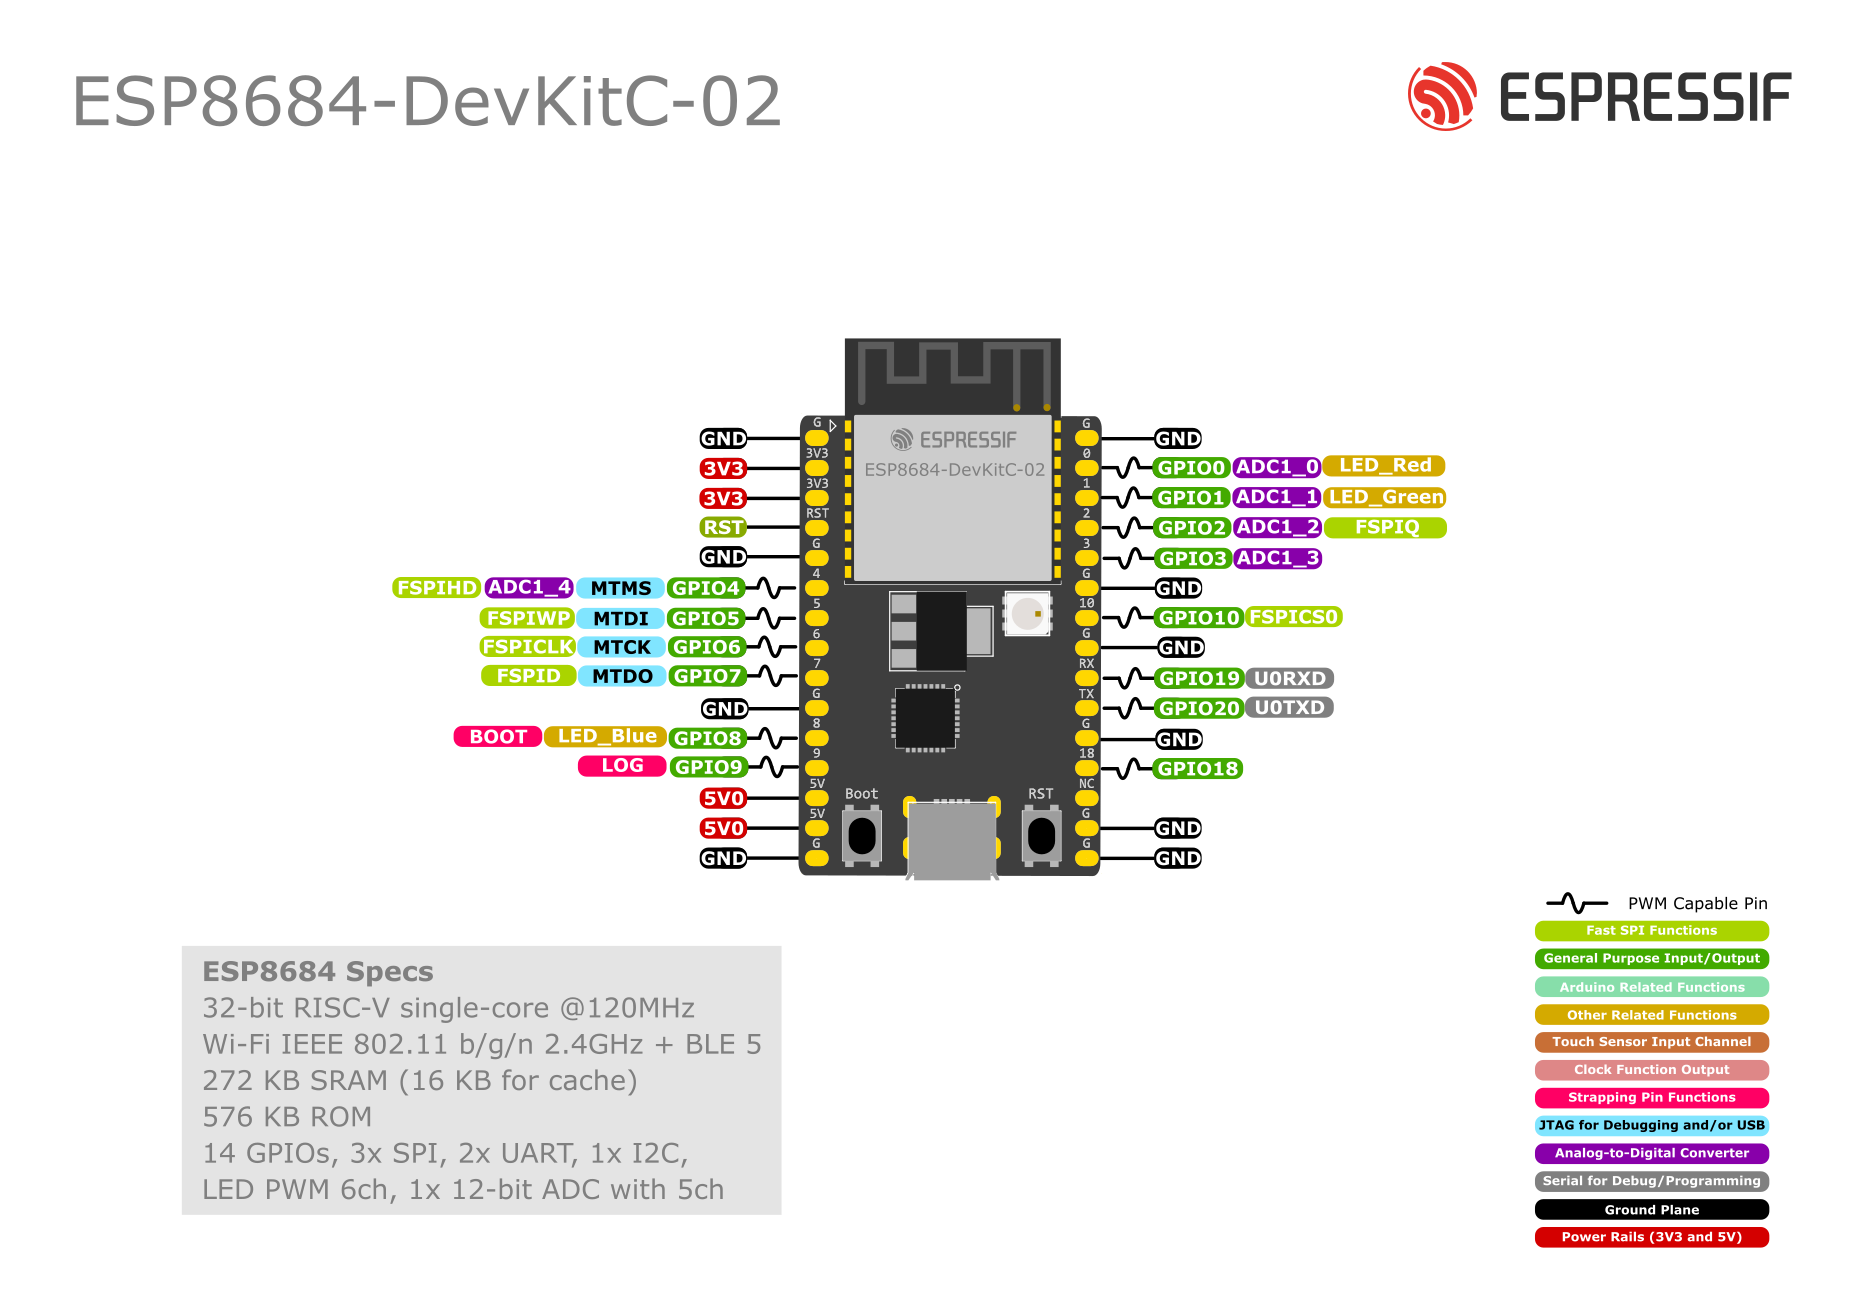 ESP8684-DevKitC-02 (click to enlarge)